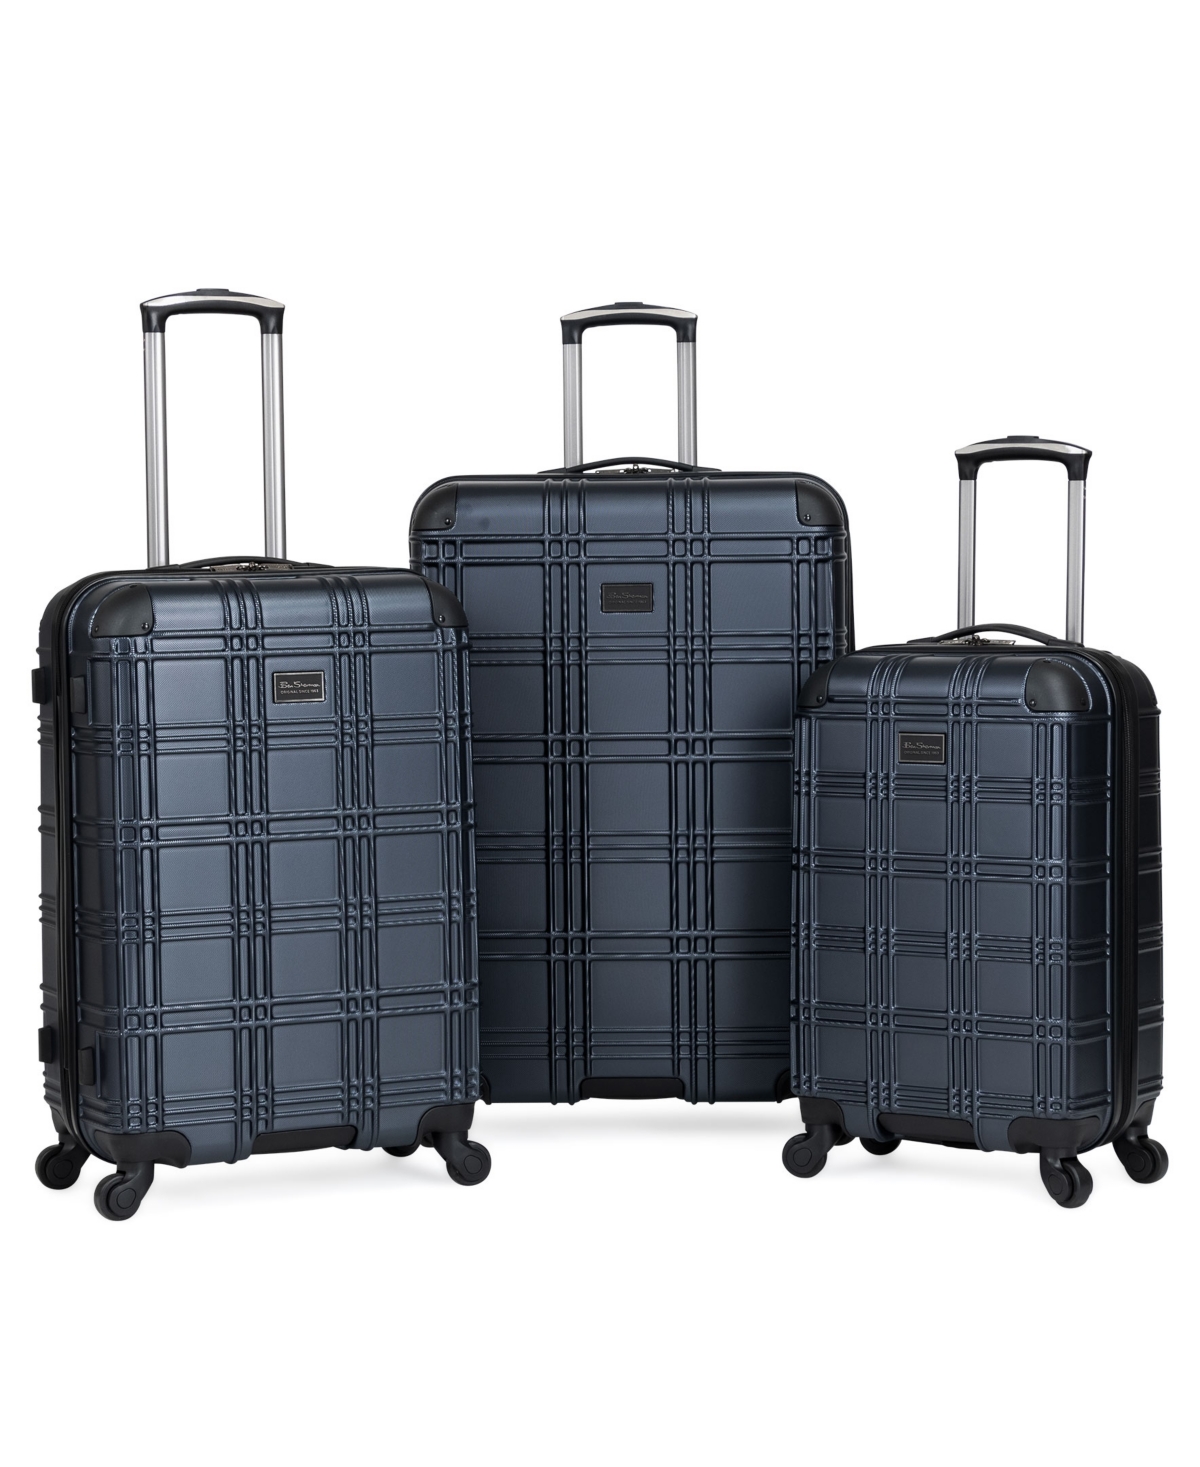 Nottingham 3 Piece Lightweight Hardside Travel Luggage Set - Naval